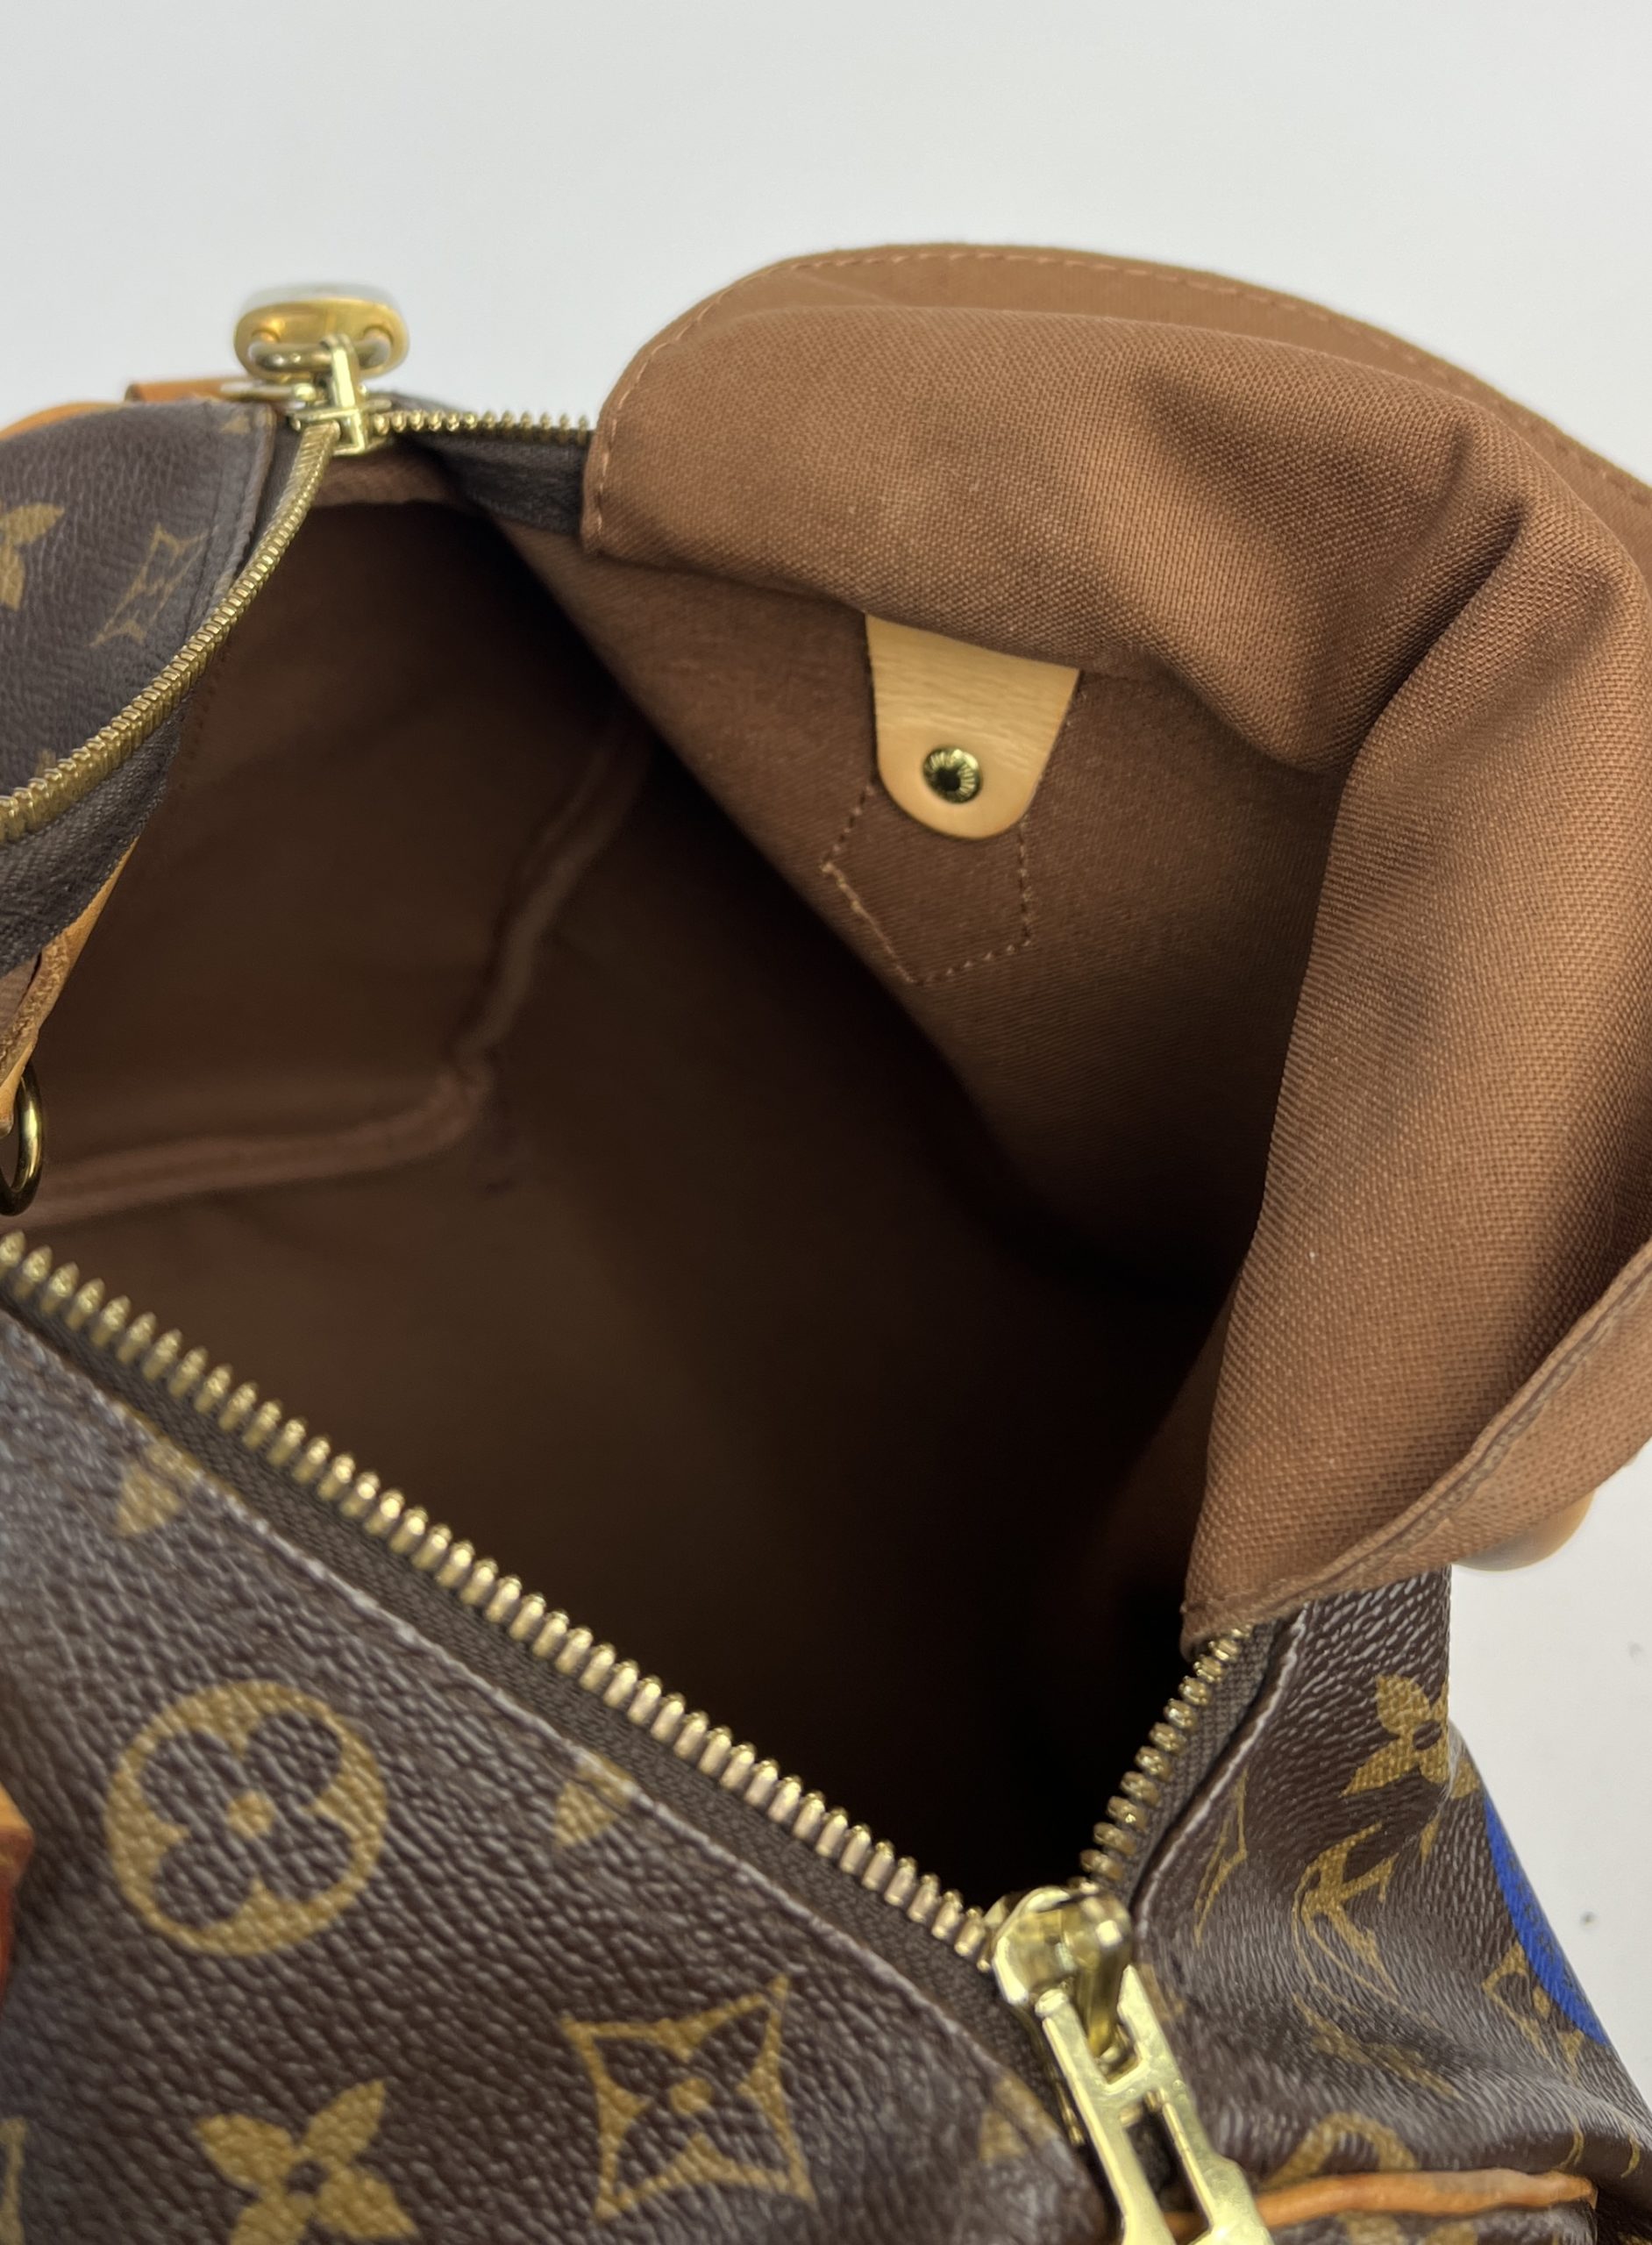 Authentic Louis Vuitton Limited Edition World Tour Speedy Bandouliere Bag